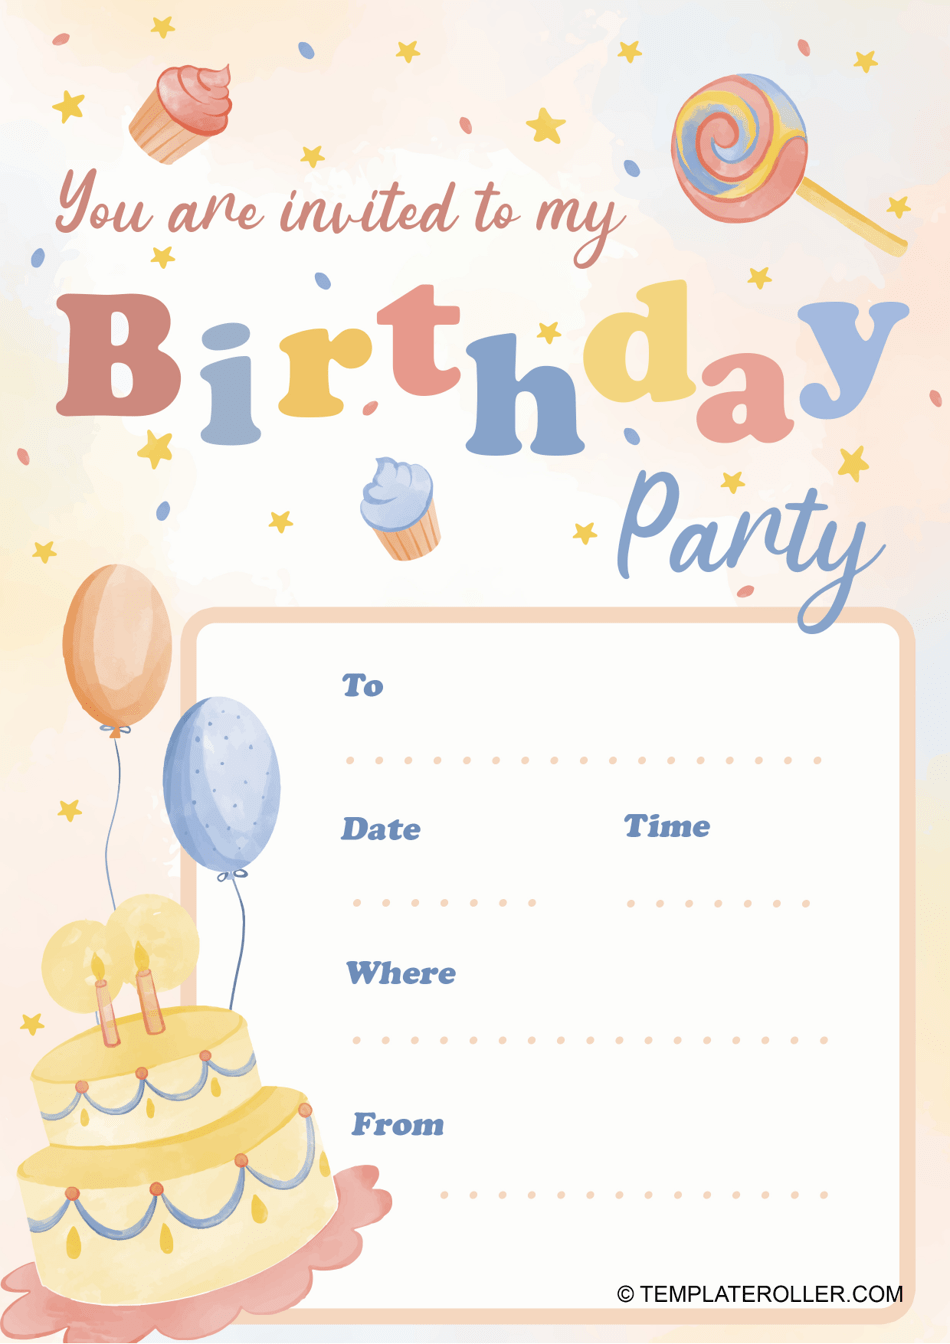 Beige Birthday Party Invitation Template